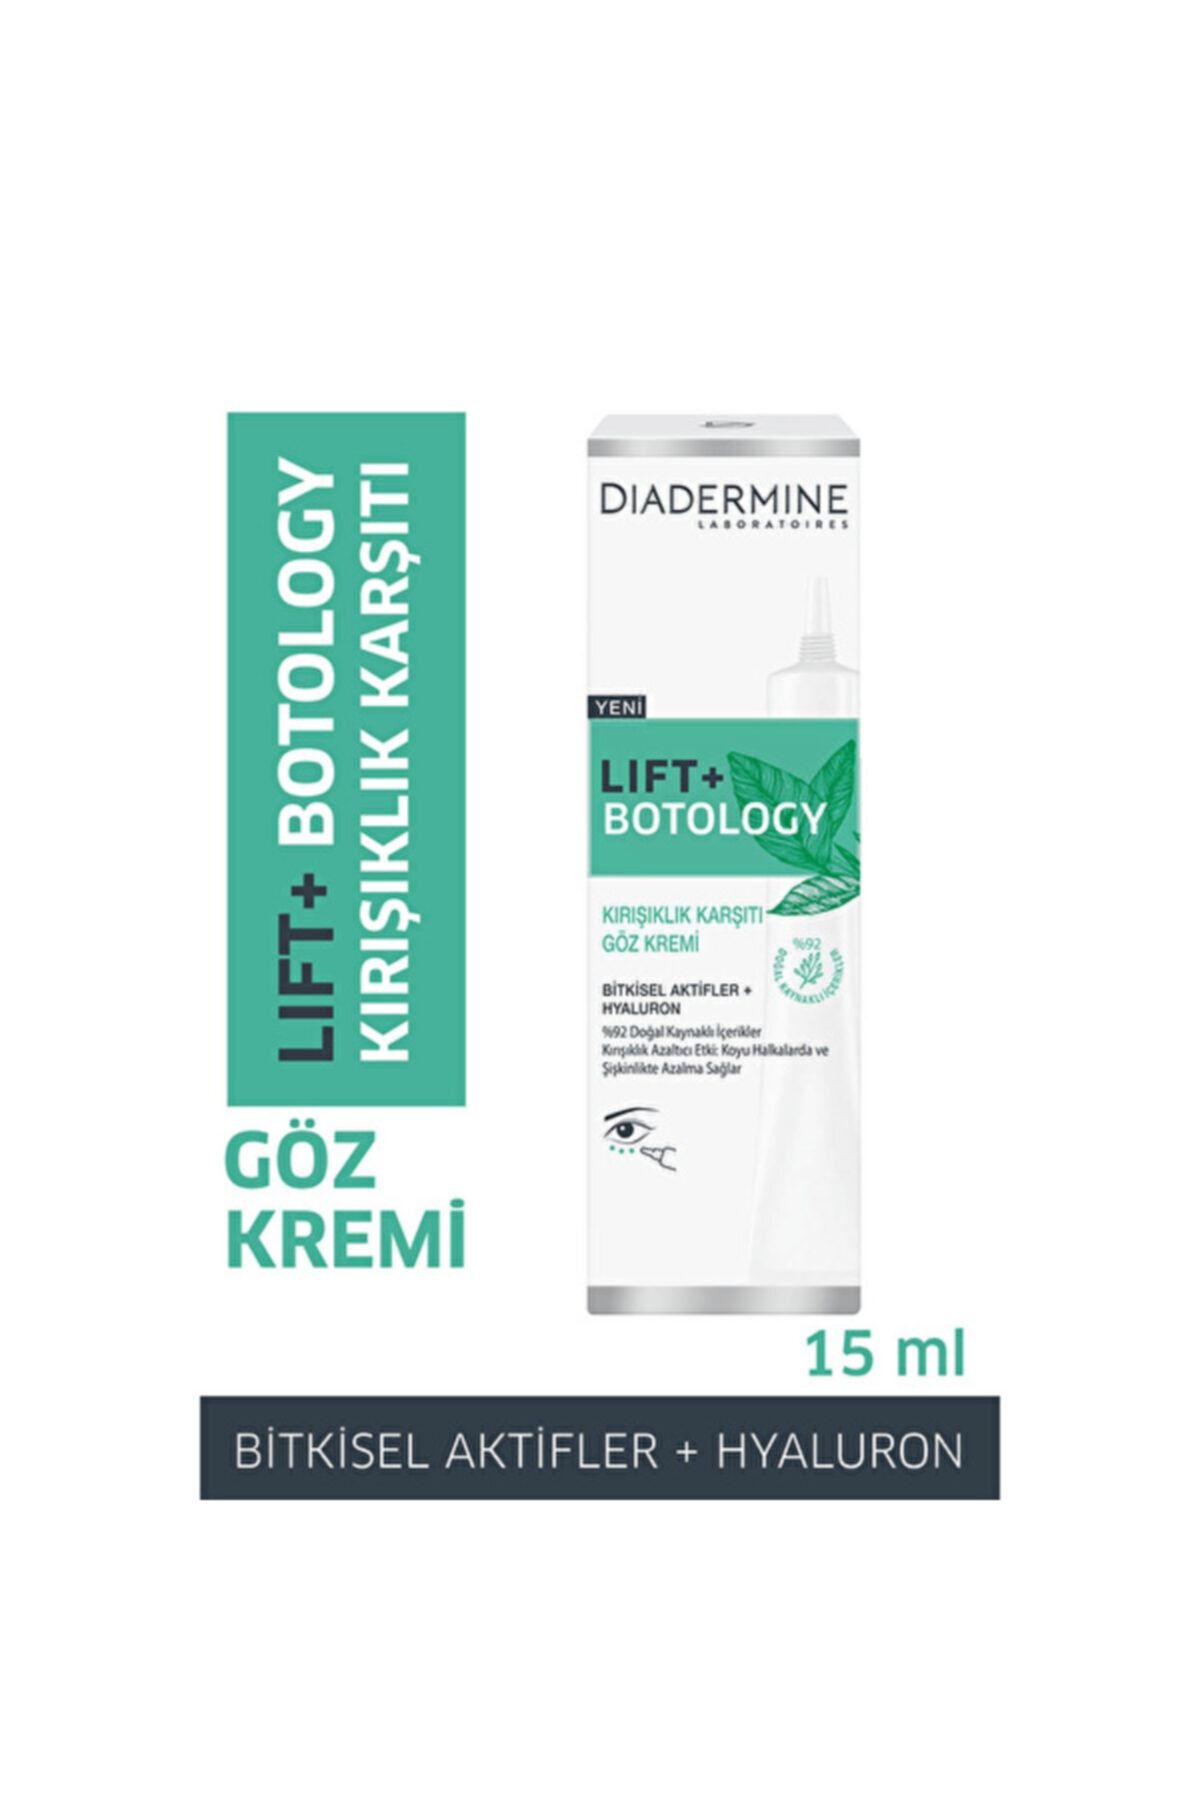 Diadermine Lift+Botology Kırışıklık Karşıtı Göz Kremi 15 ml